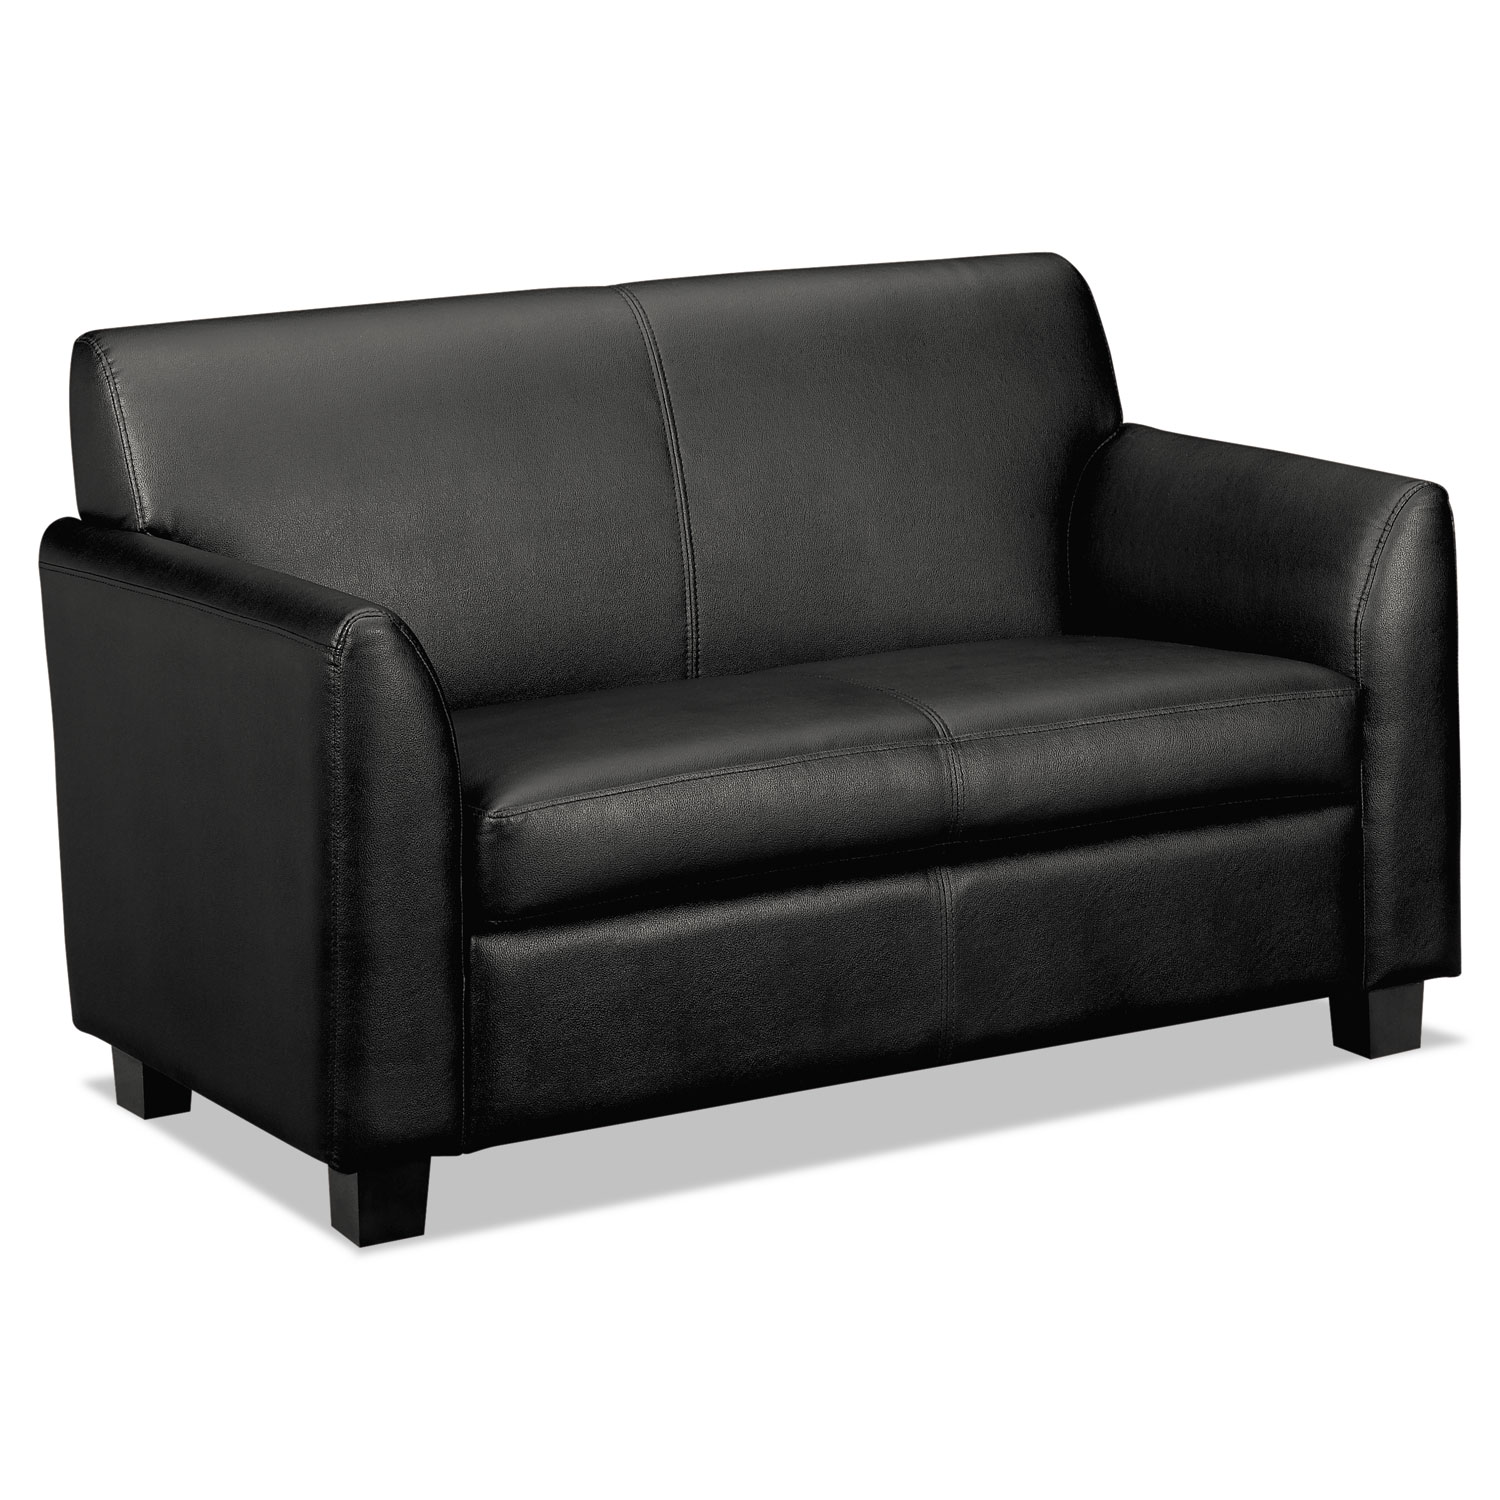  HON HVL872.SB11 Circulate Leather Reception Two-Cushion Loveseat, 53.5w x 28.75d x 32h, Black (BSXVL872SB11) 